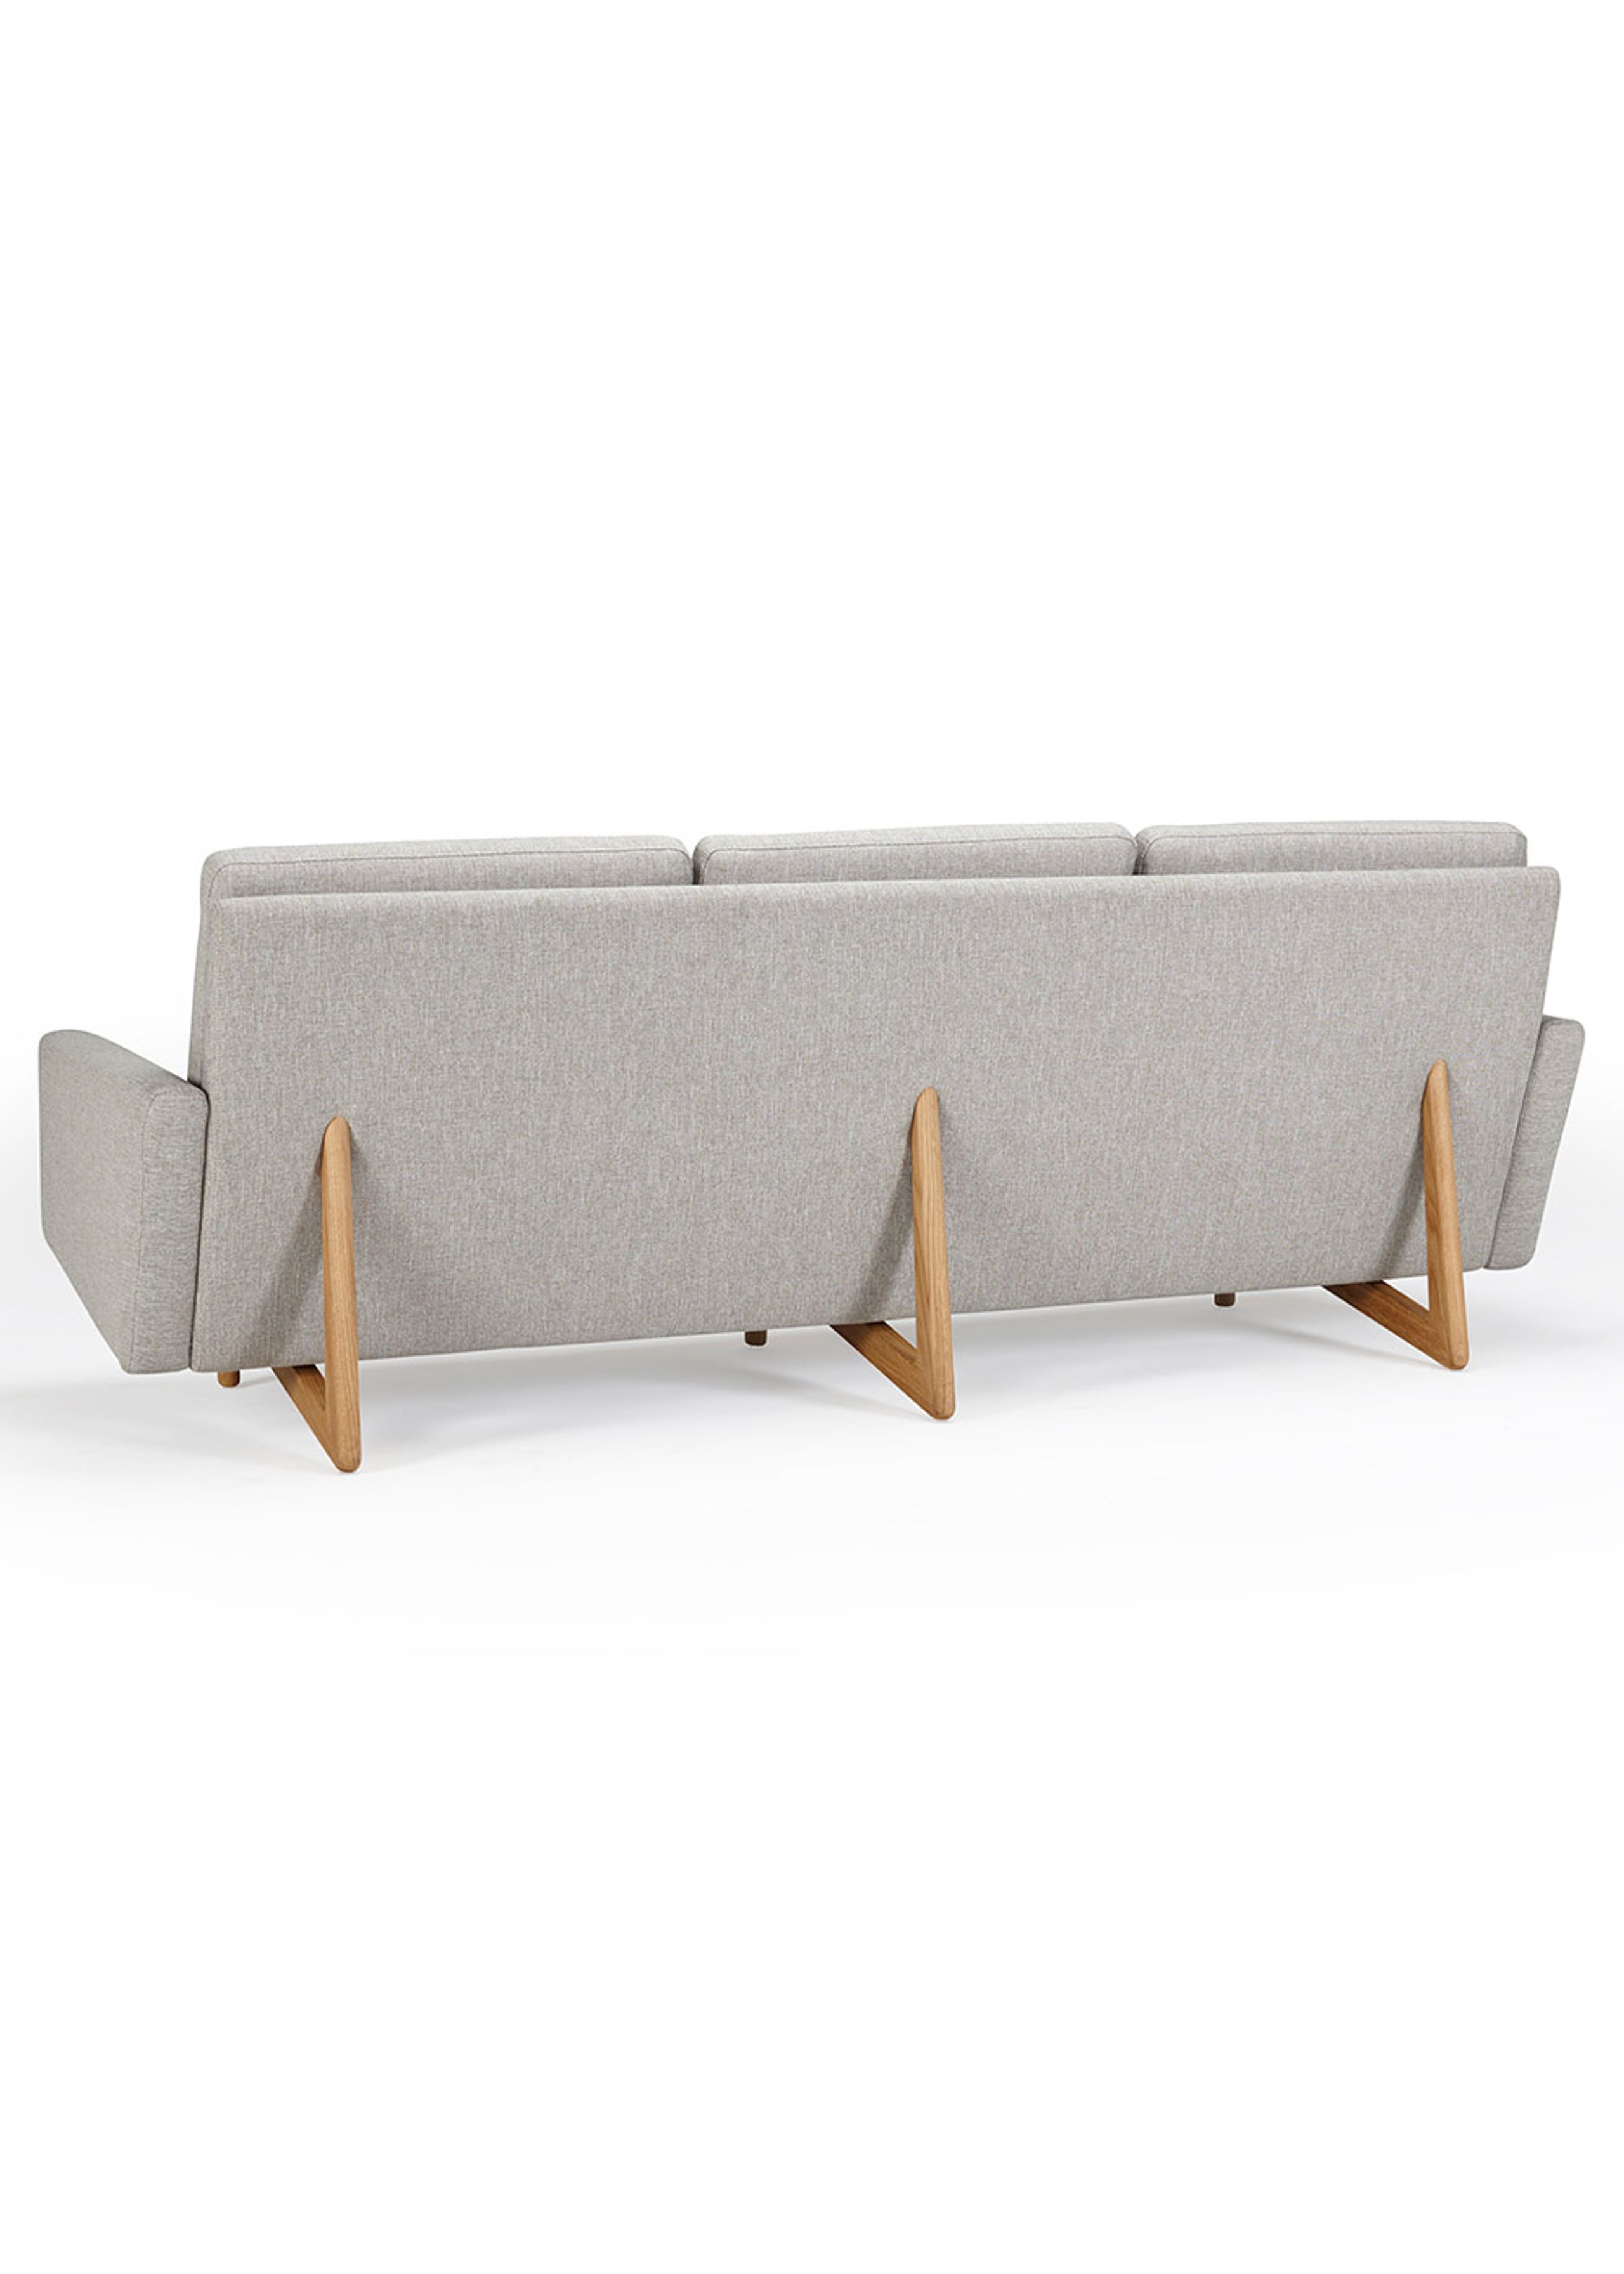 Kragelund Furniture - Canapé - Egsmark - Arm rest upholstered - Mahoga wool - 3 pr.